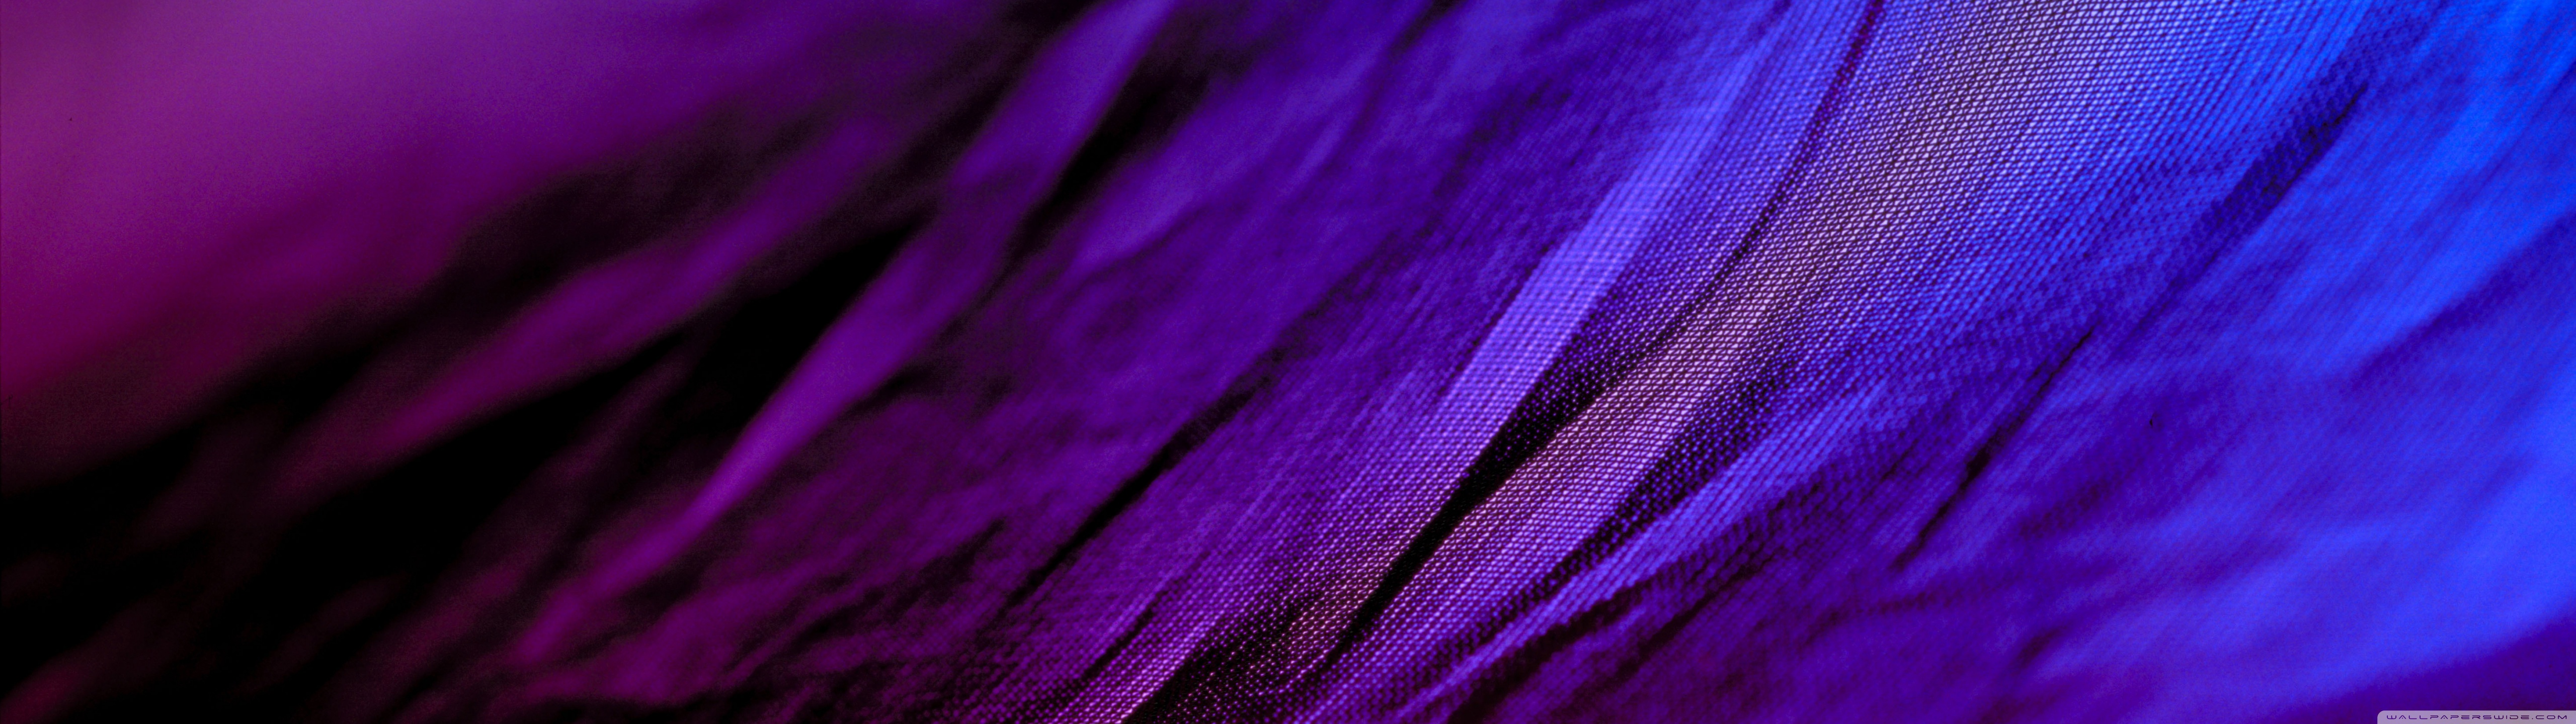 Purple Cloth Ultra HD Desktop Background Wallpaper For 4k UHD Tv